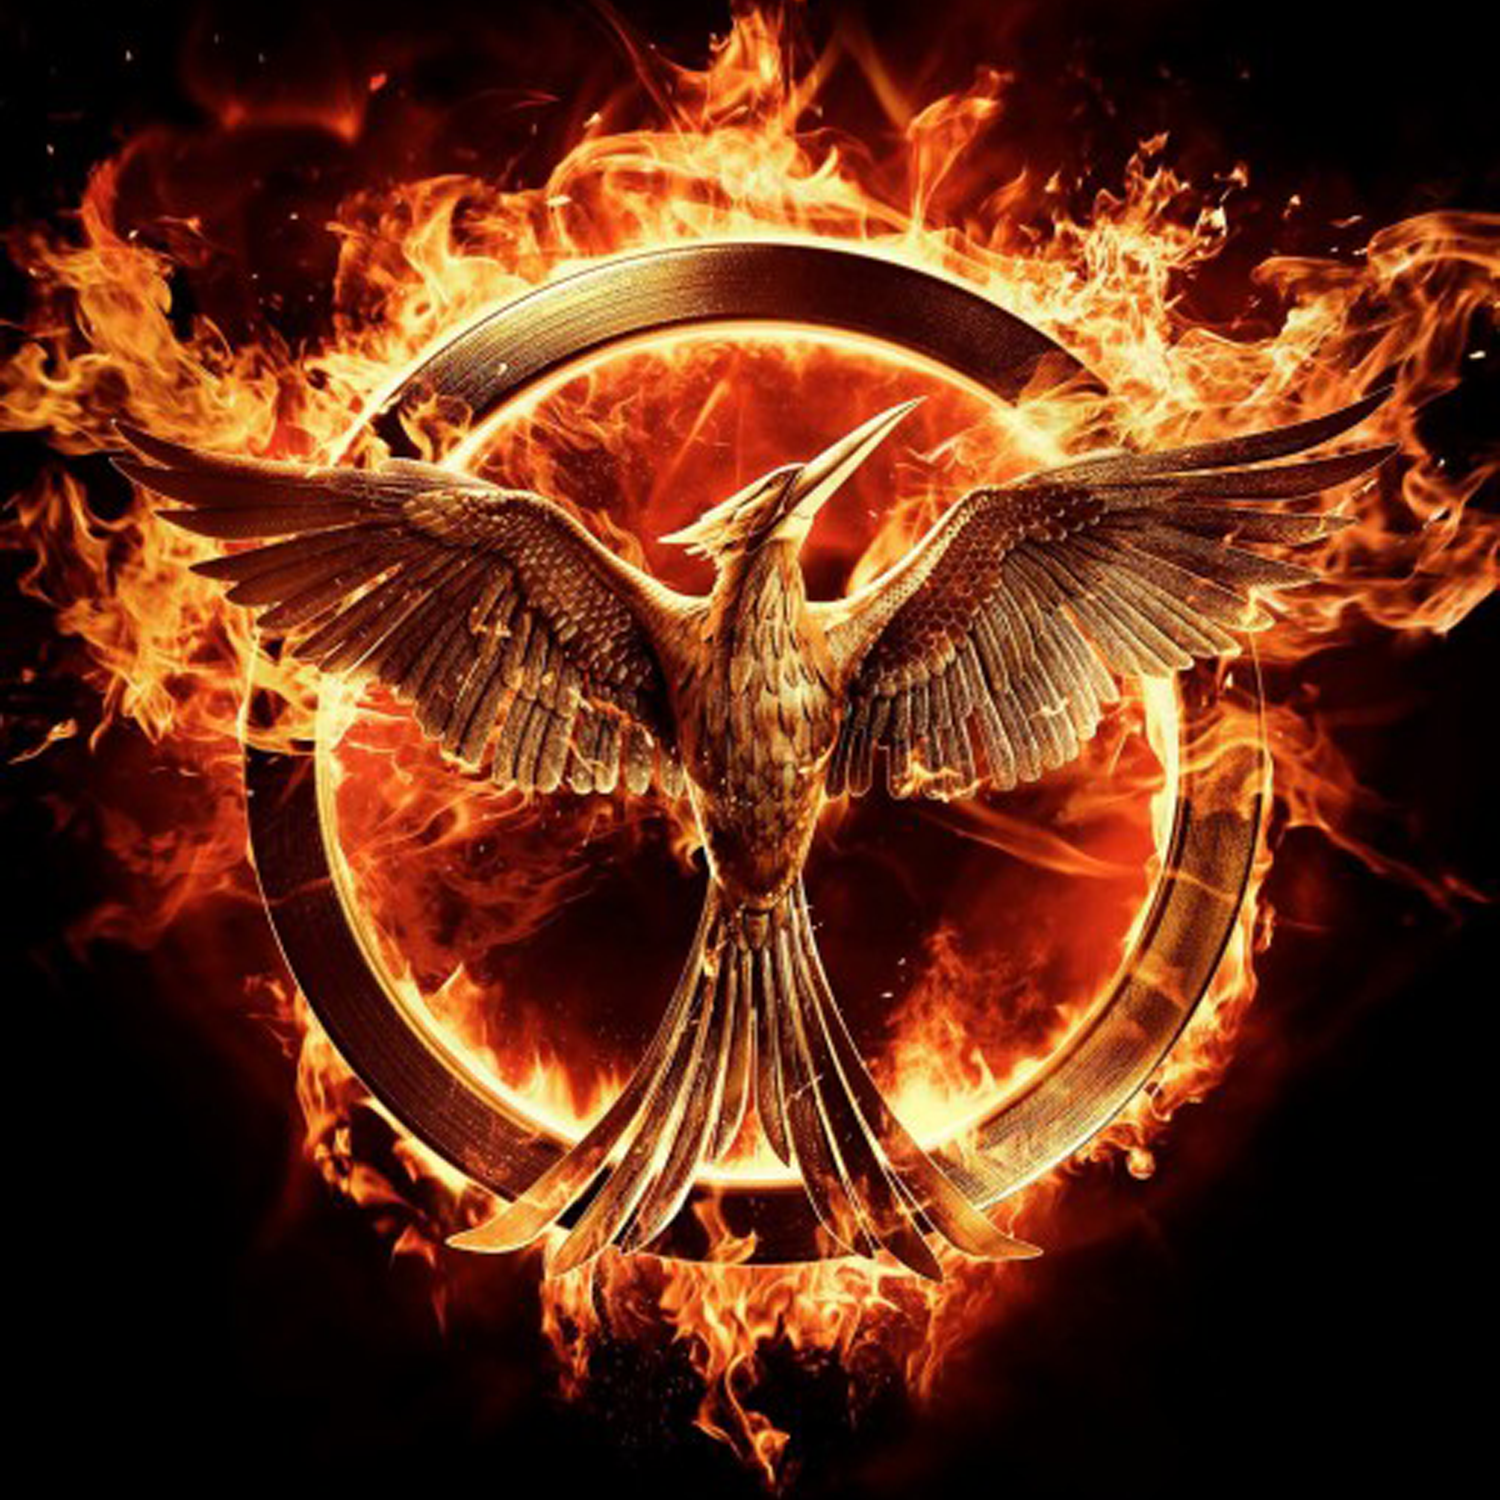 The Hunger Games: Mockingjay Pt 1 (2014)